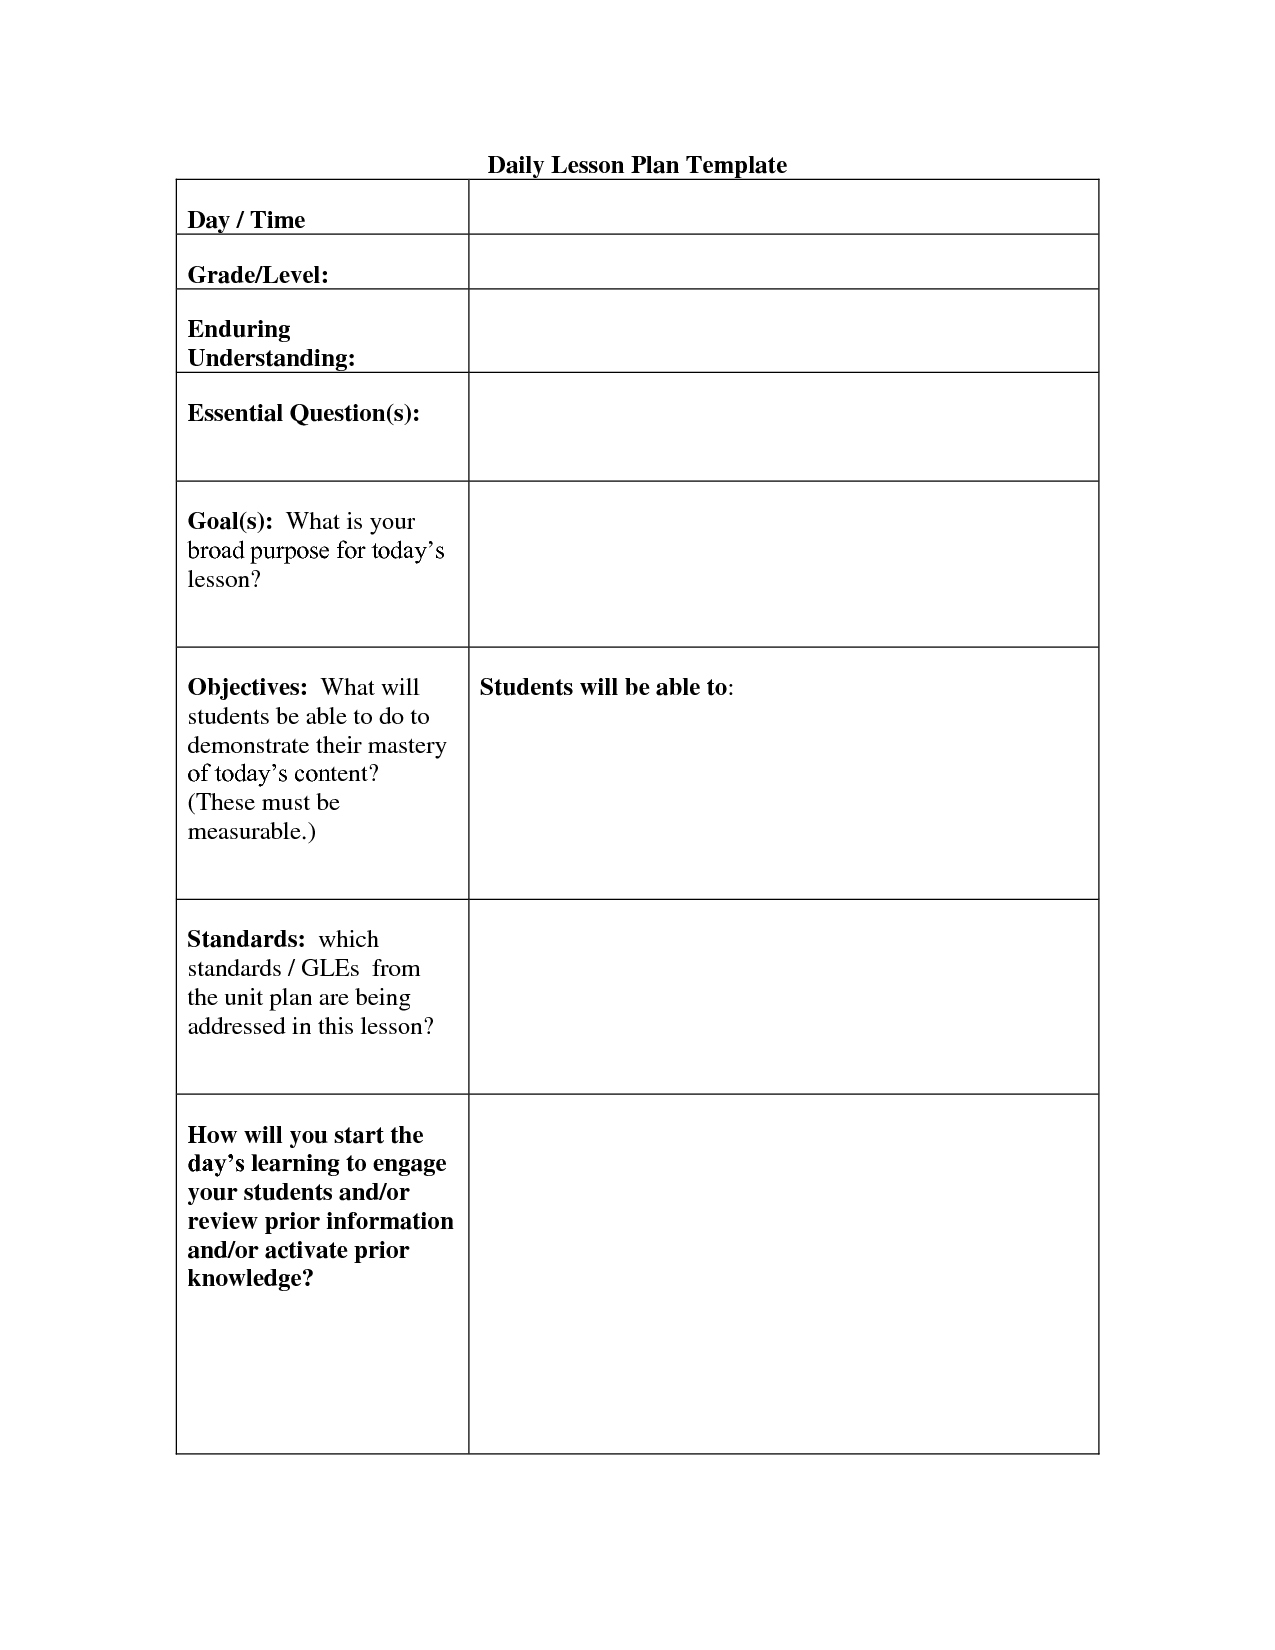 printable-daily-lesson-plan-template-printable-templates